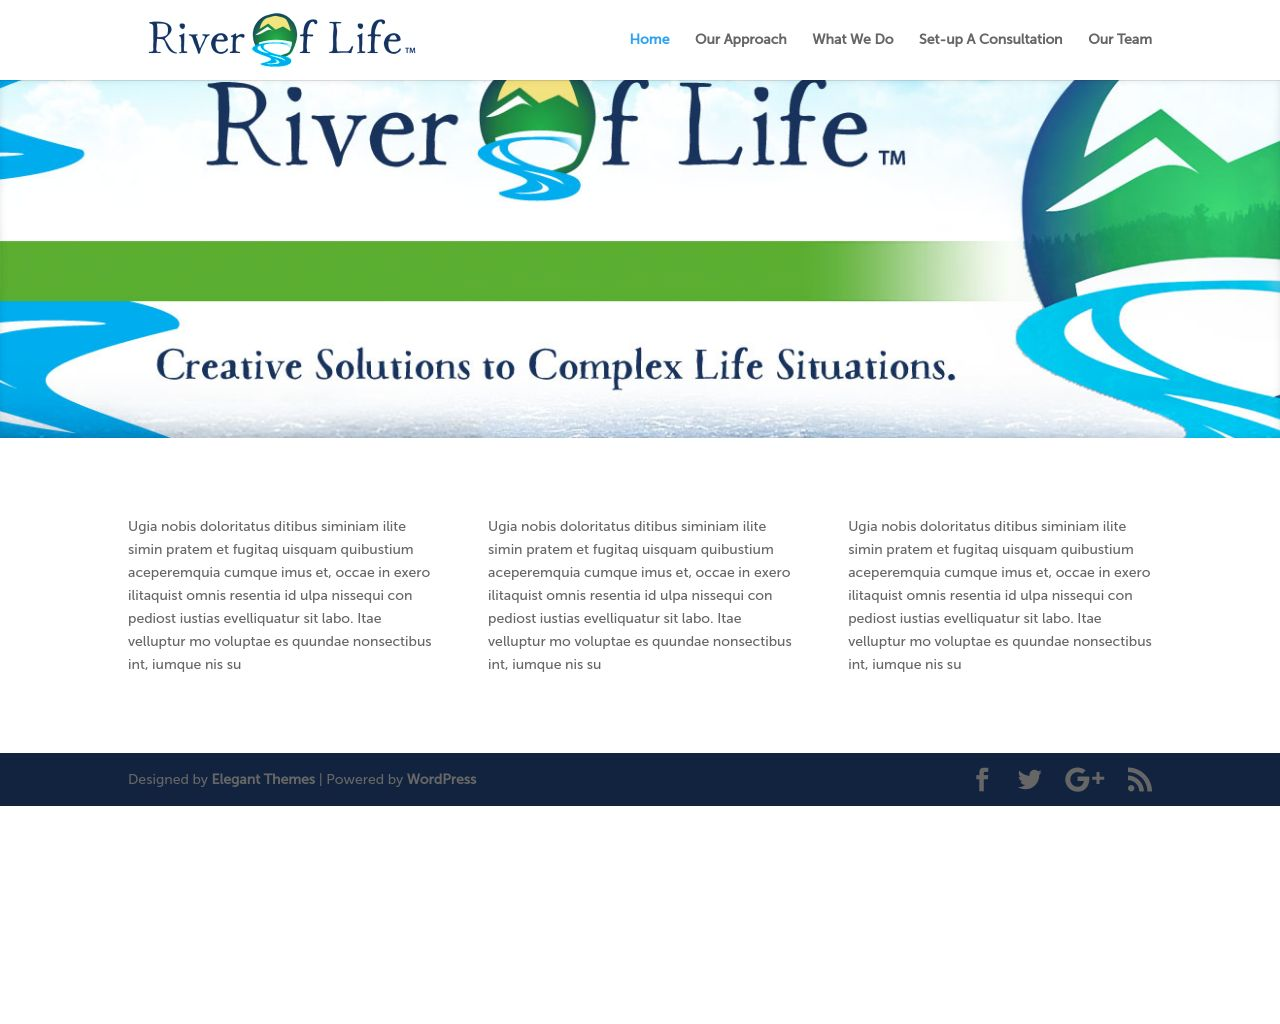 Image site riveroflifegeriatricfamilycareservices.org in 1280x1024